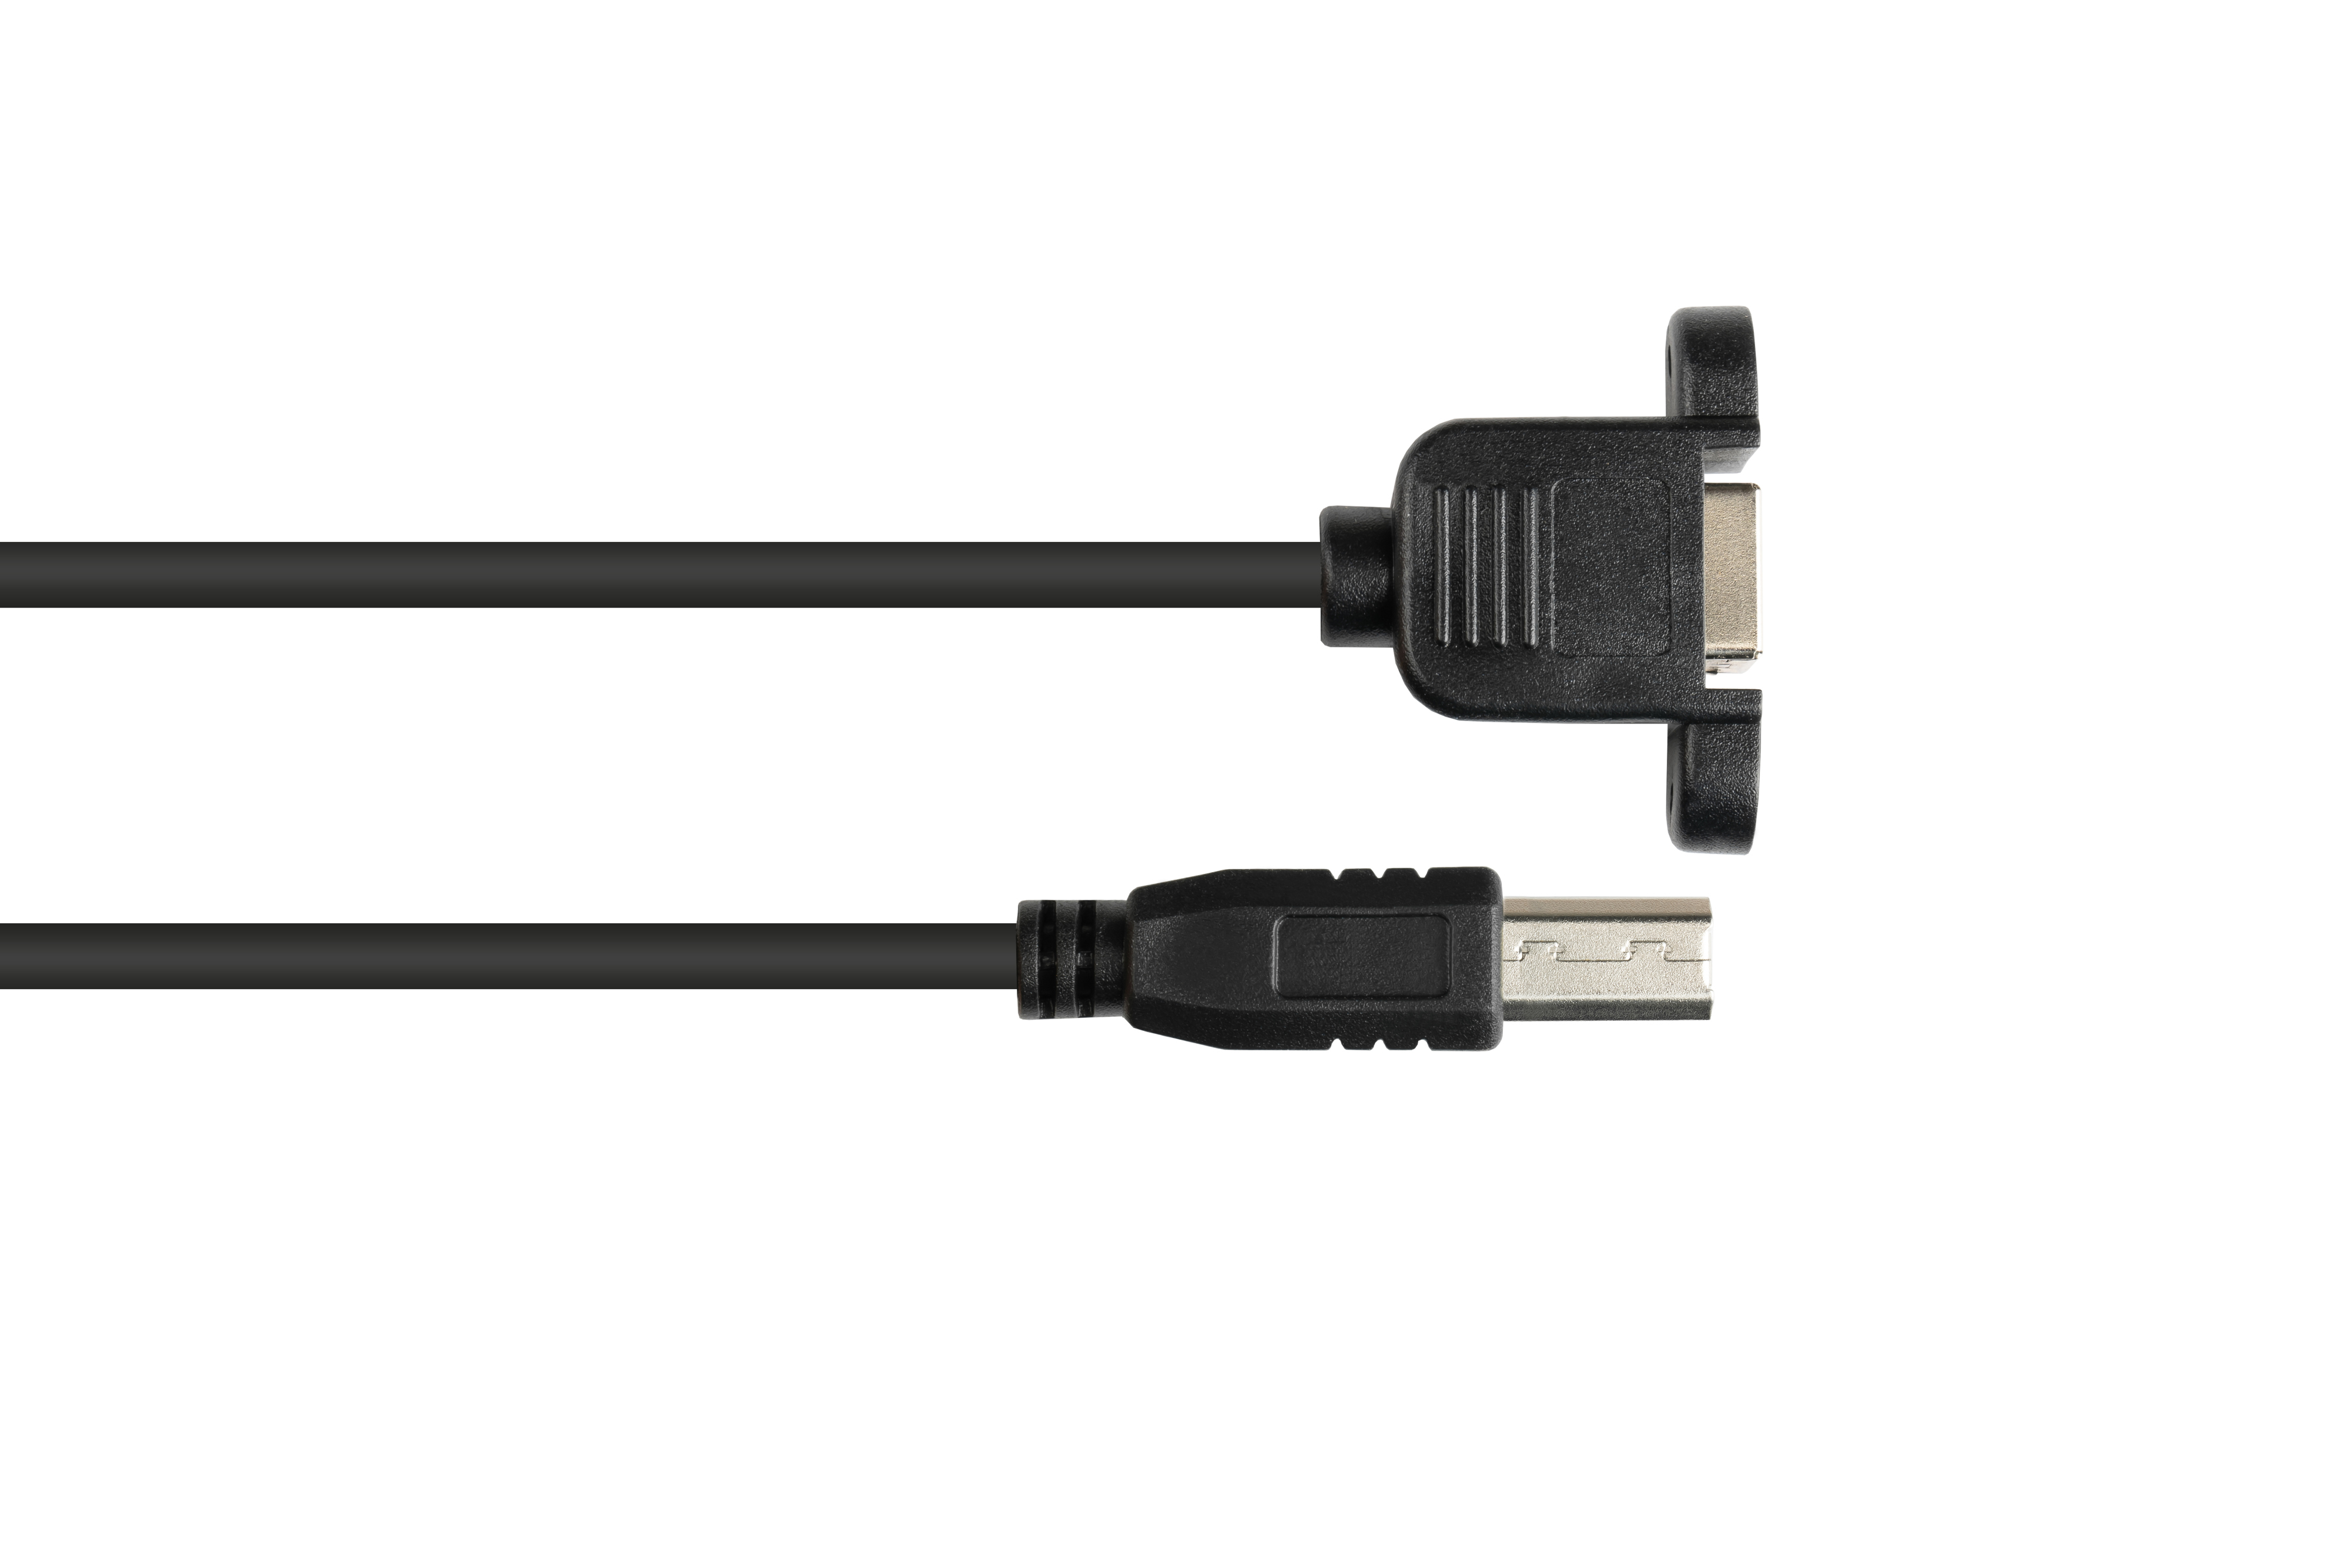 Einbaubuchse CU, Stecker an 2.0 CONNECTIONS B B, Verlängerungskabel USB schwarz GOOD